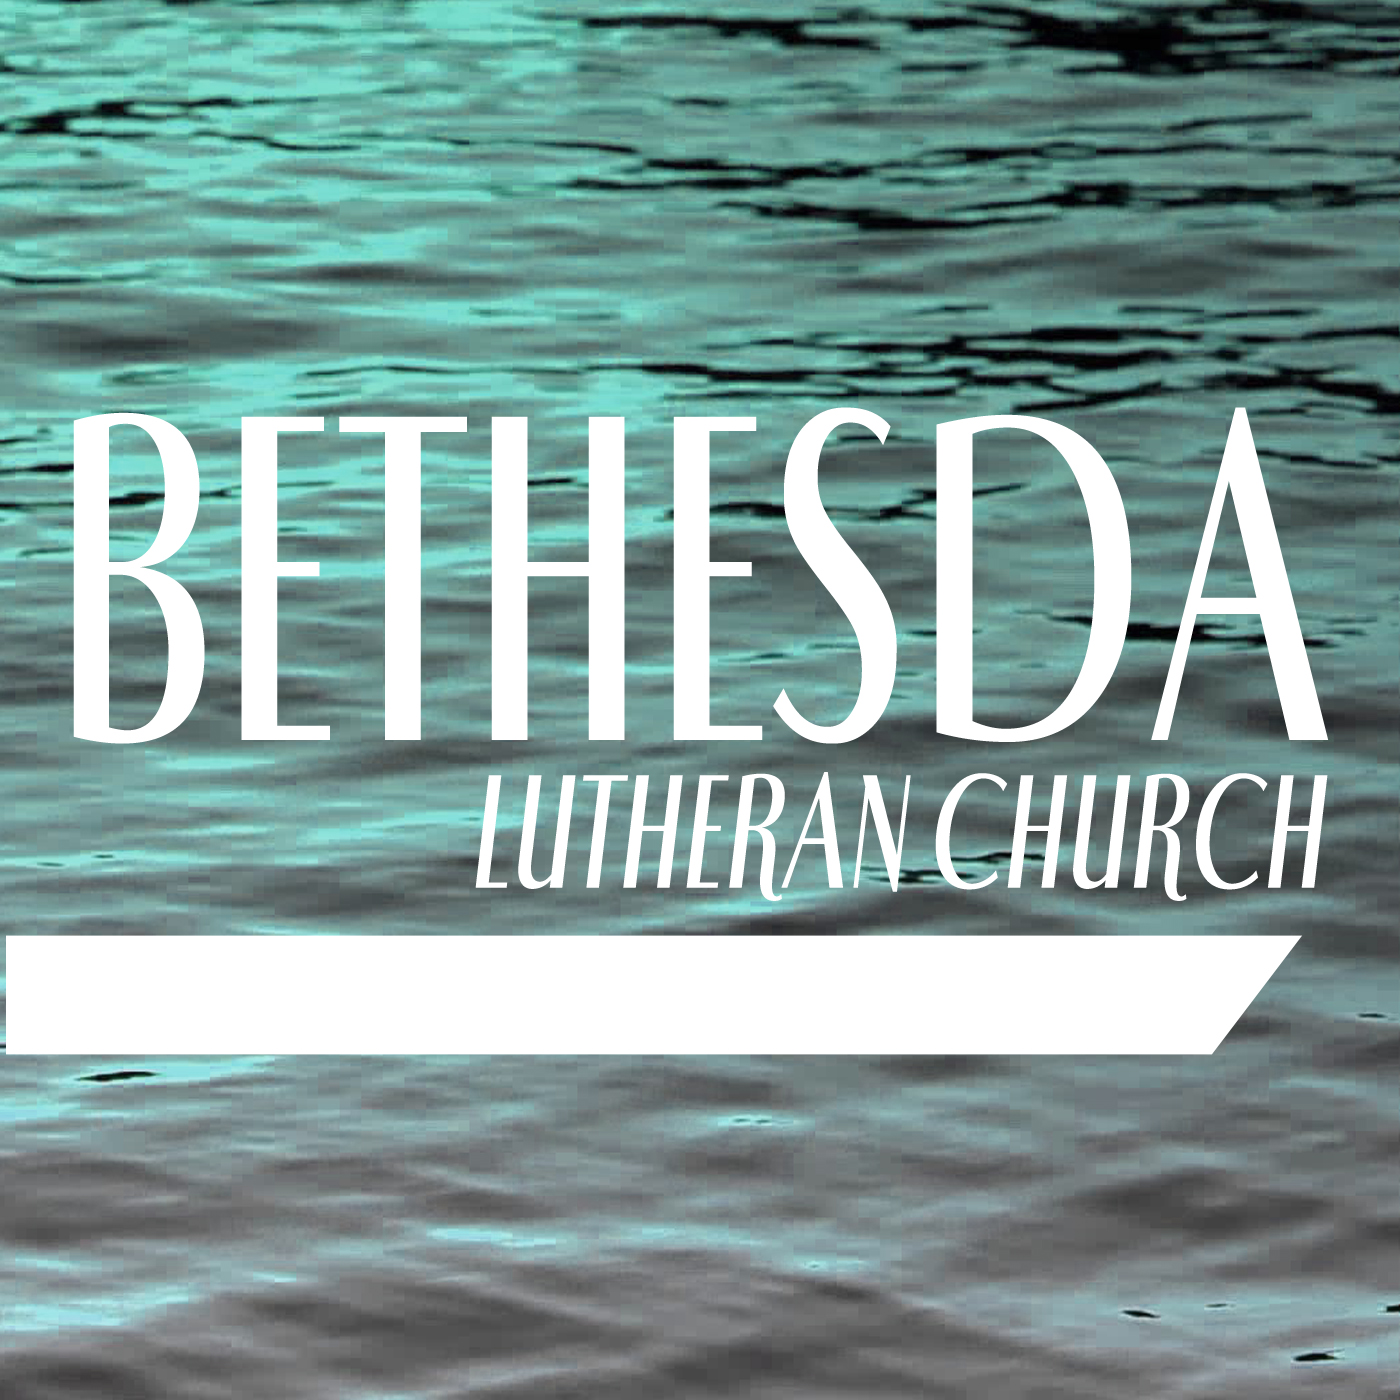 Bethesda Lutheran Church